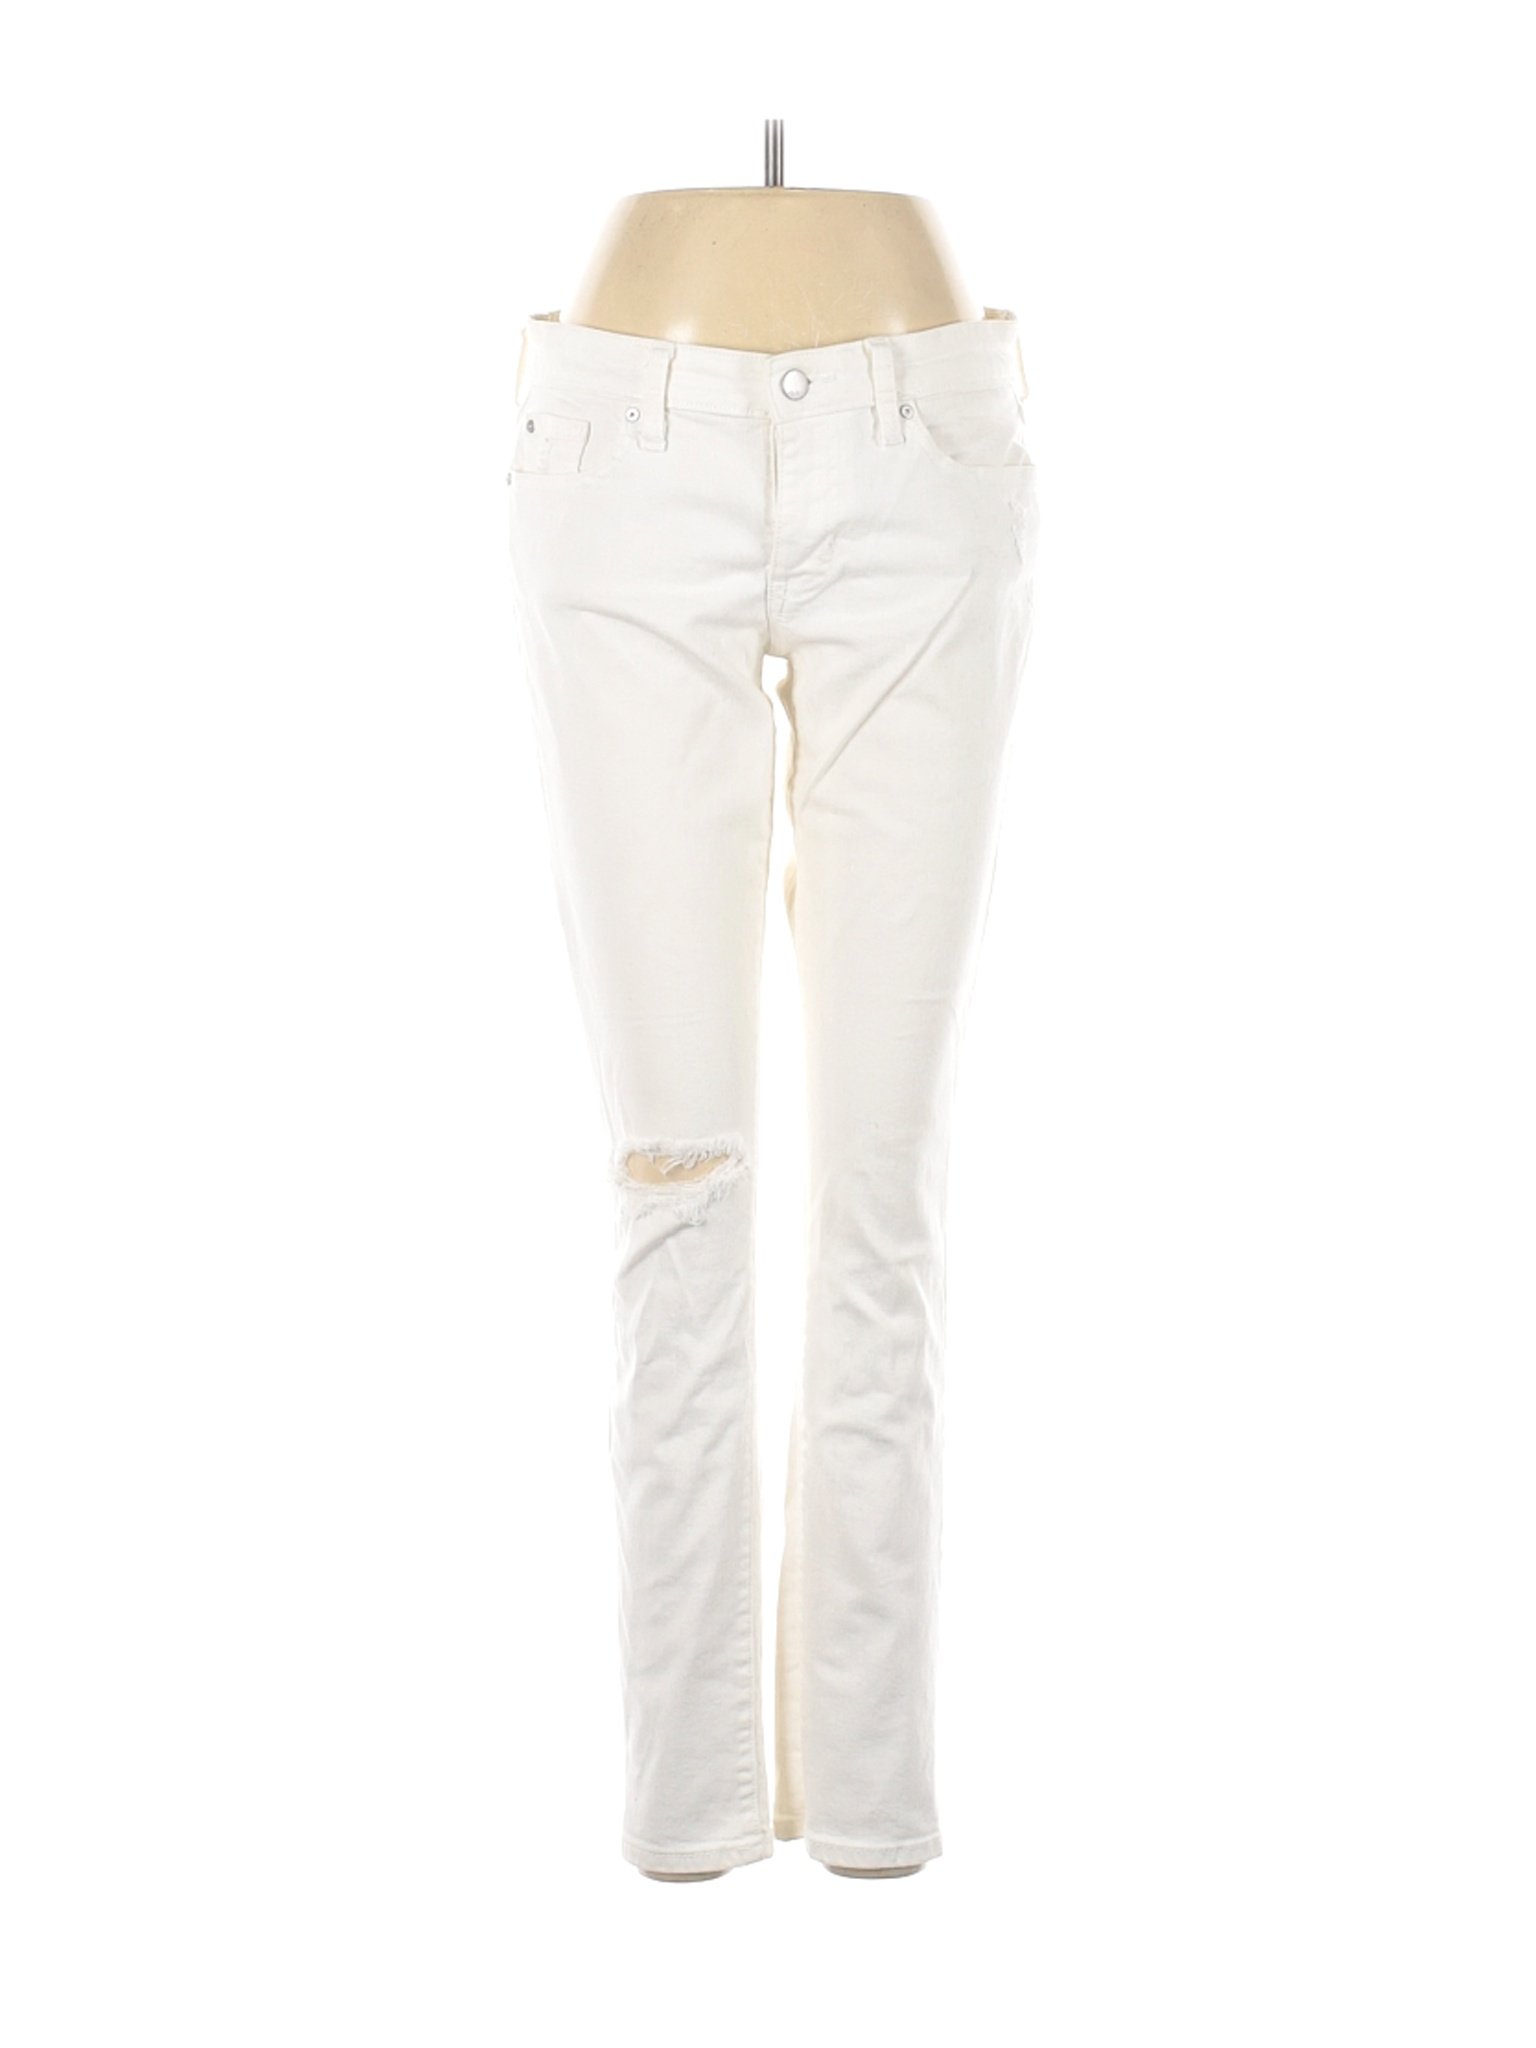 Gap Women White Jeans 6 | eBay